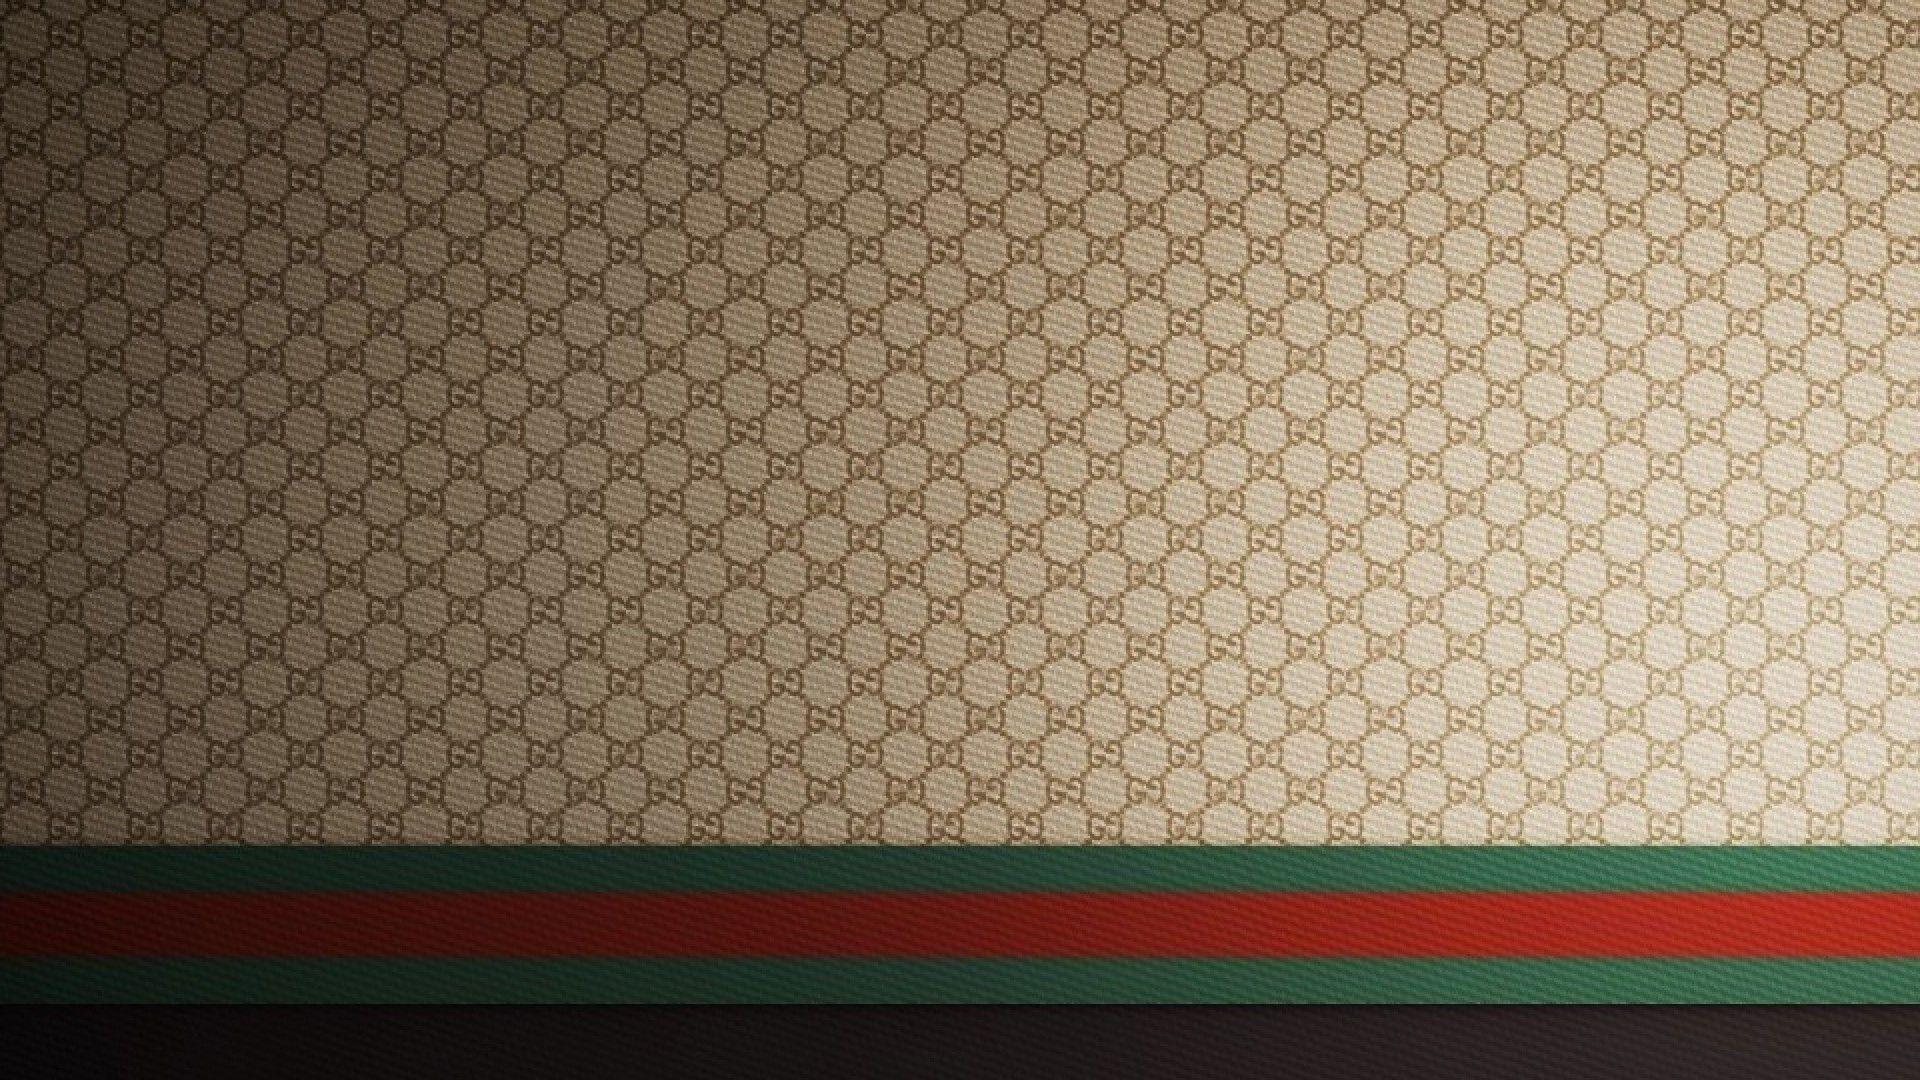 Gucci wallpaper HD free download